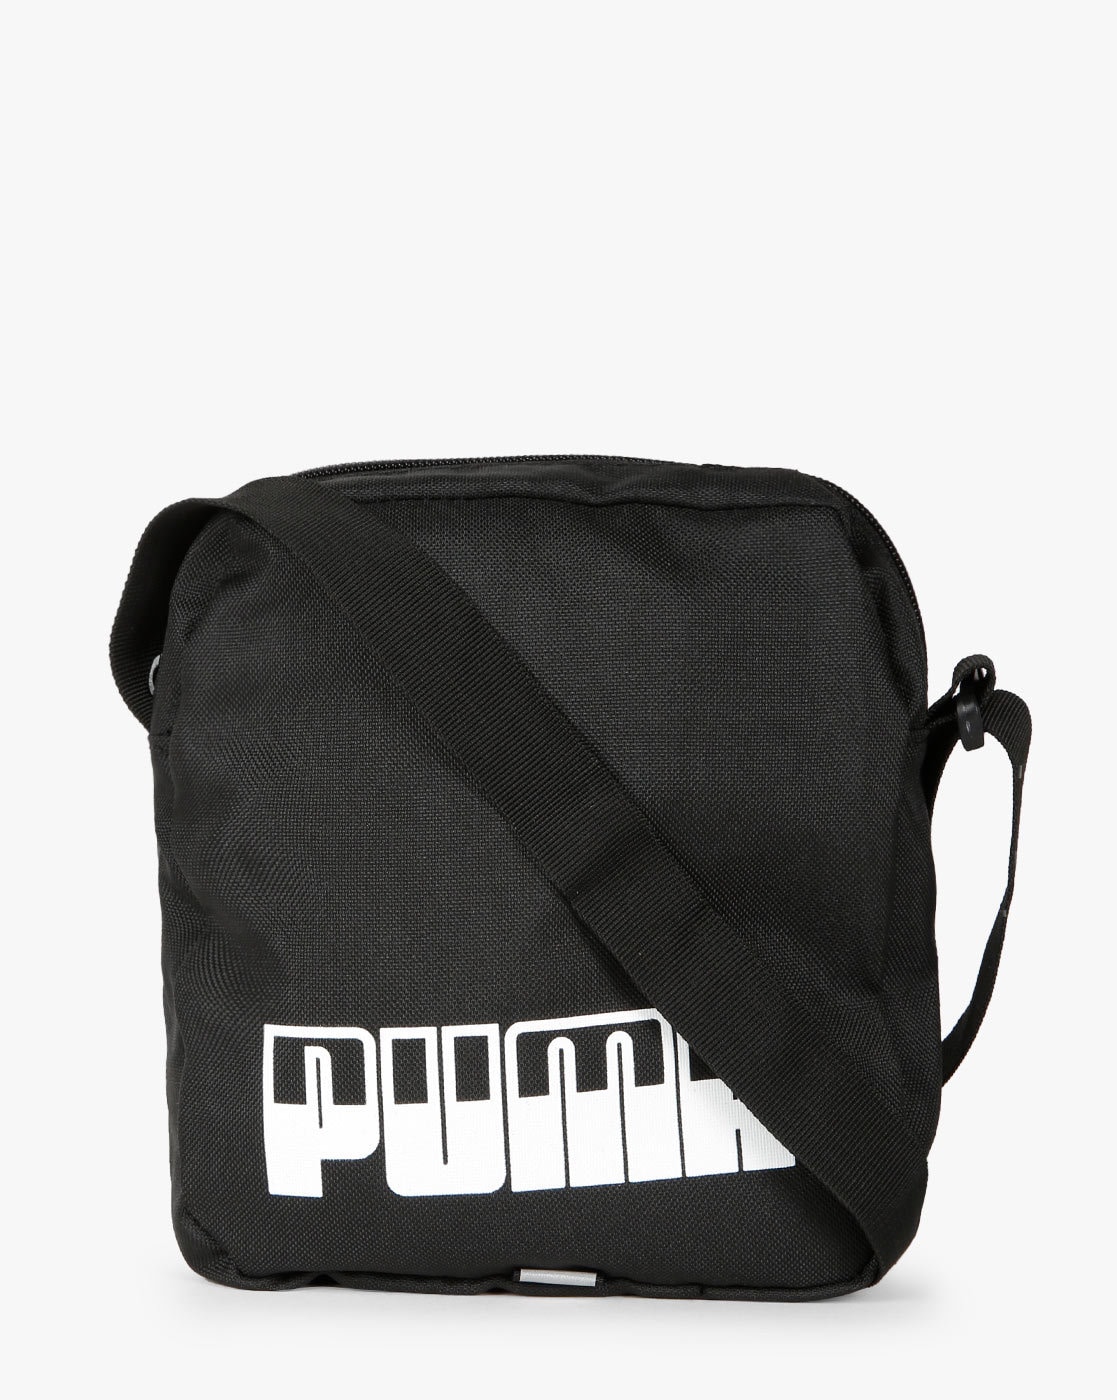 puma bags for men online